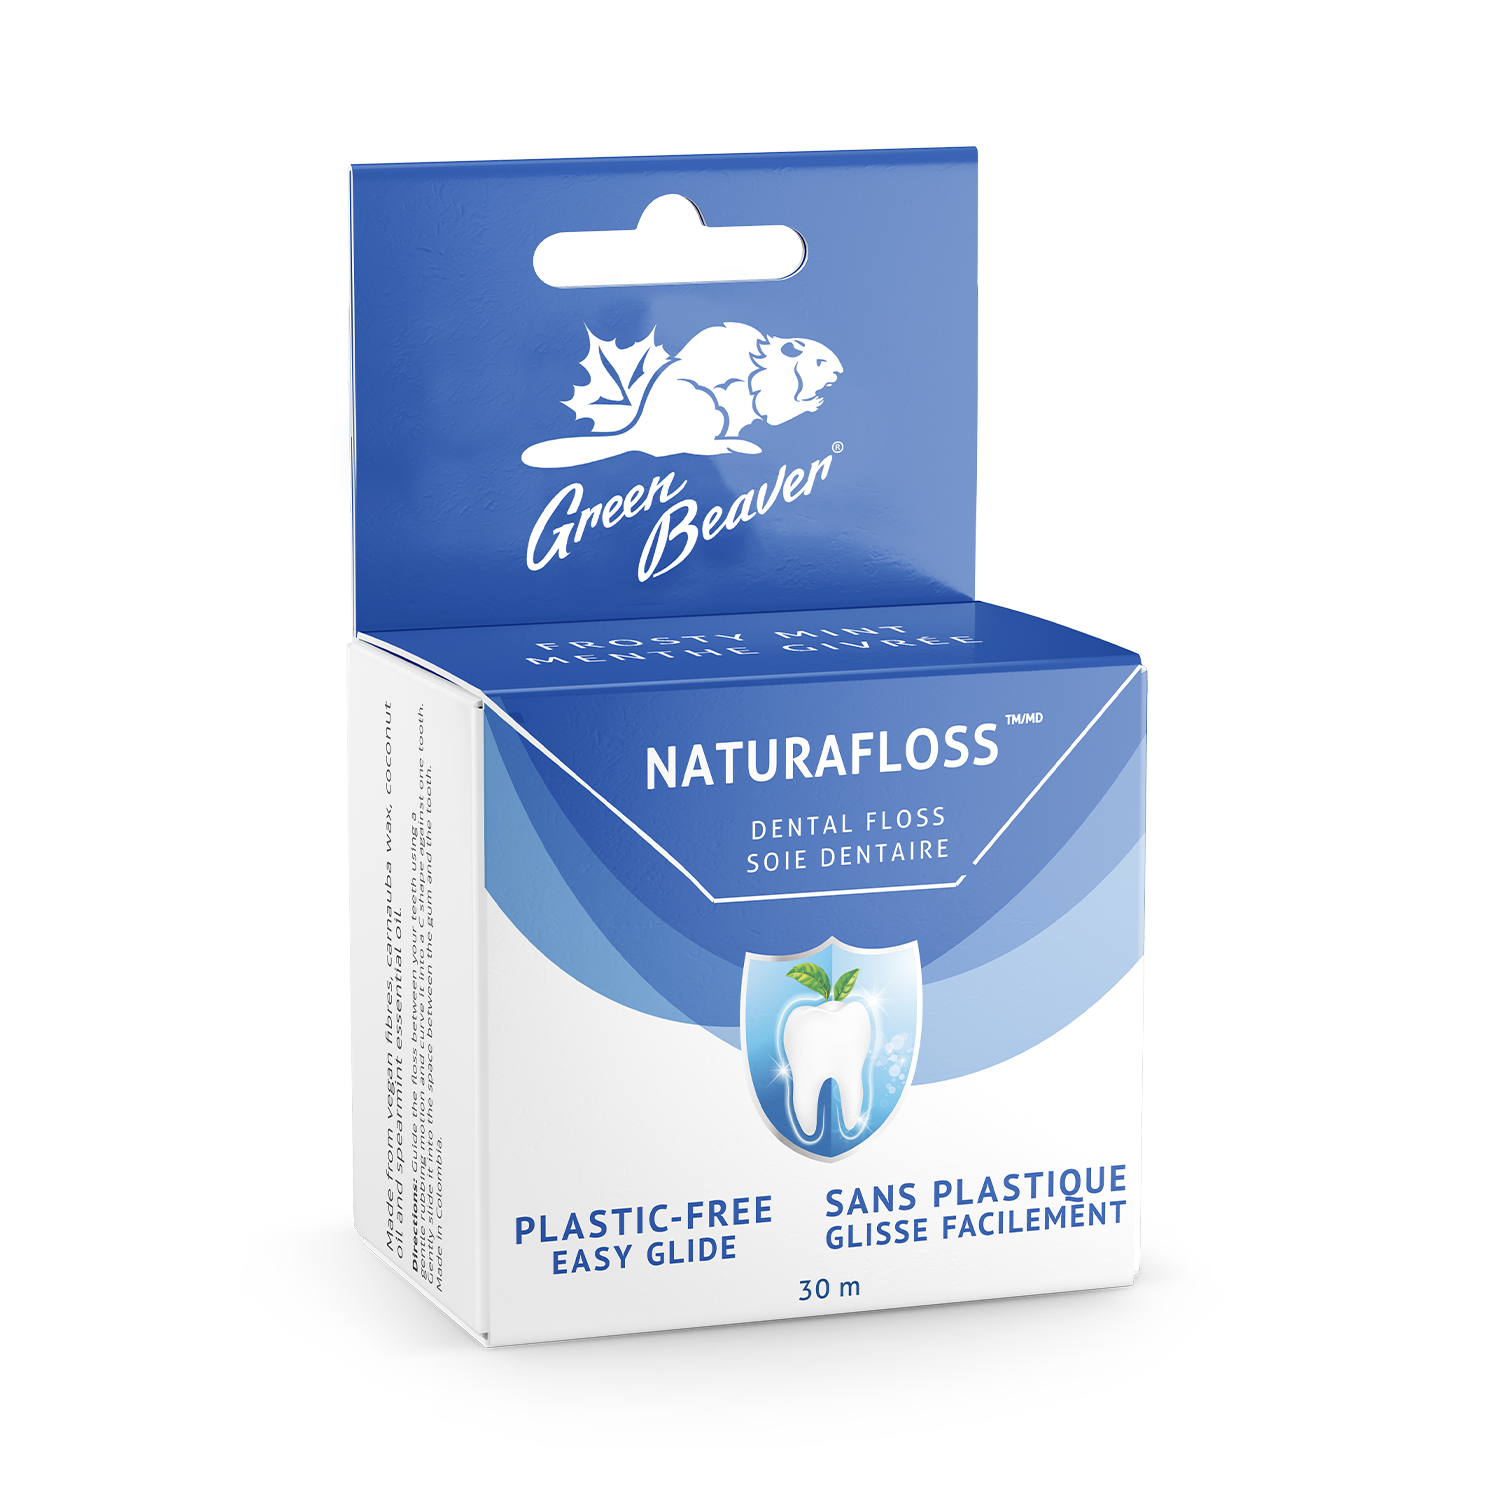 NaturaFloss™ Dental Floss - Frosty Mint (30m) - by Green Beaver |ProCare Outlet|